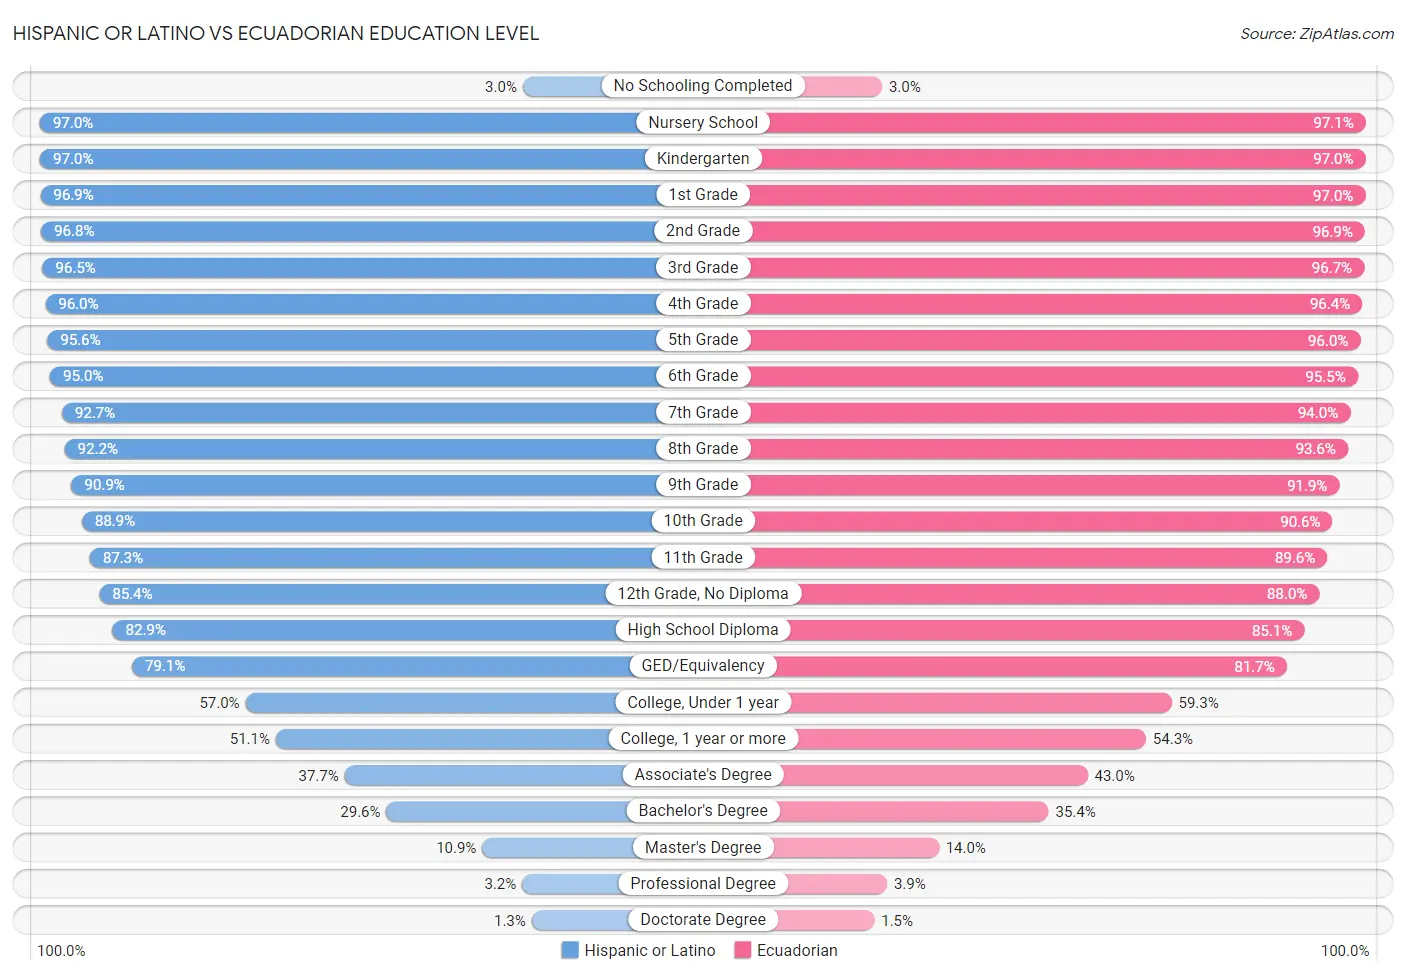 Hispanic or Latino vs Ecuadorian Education Level